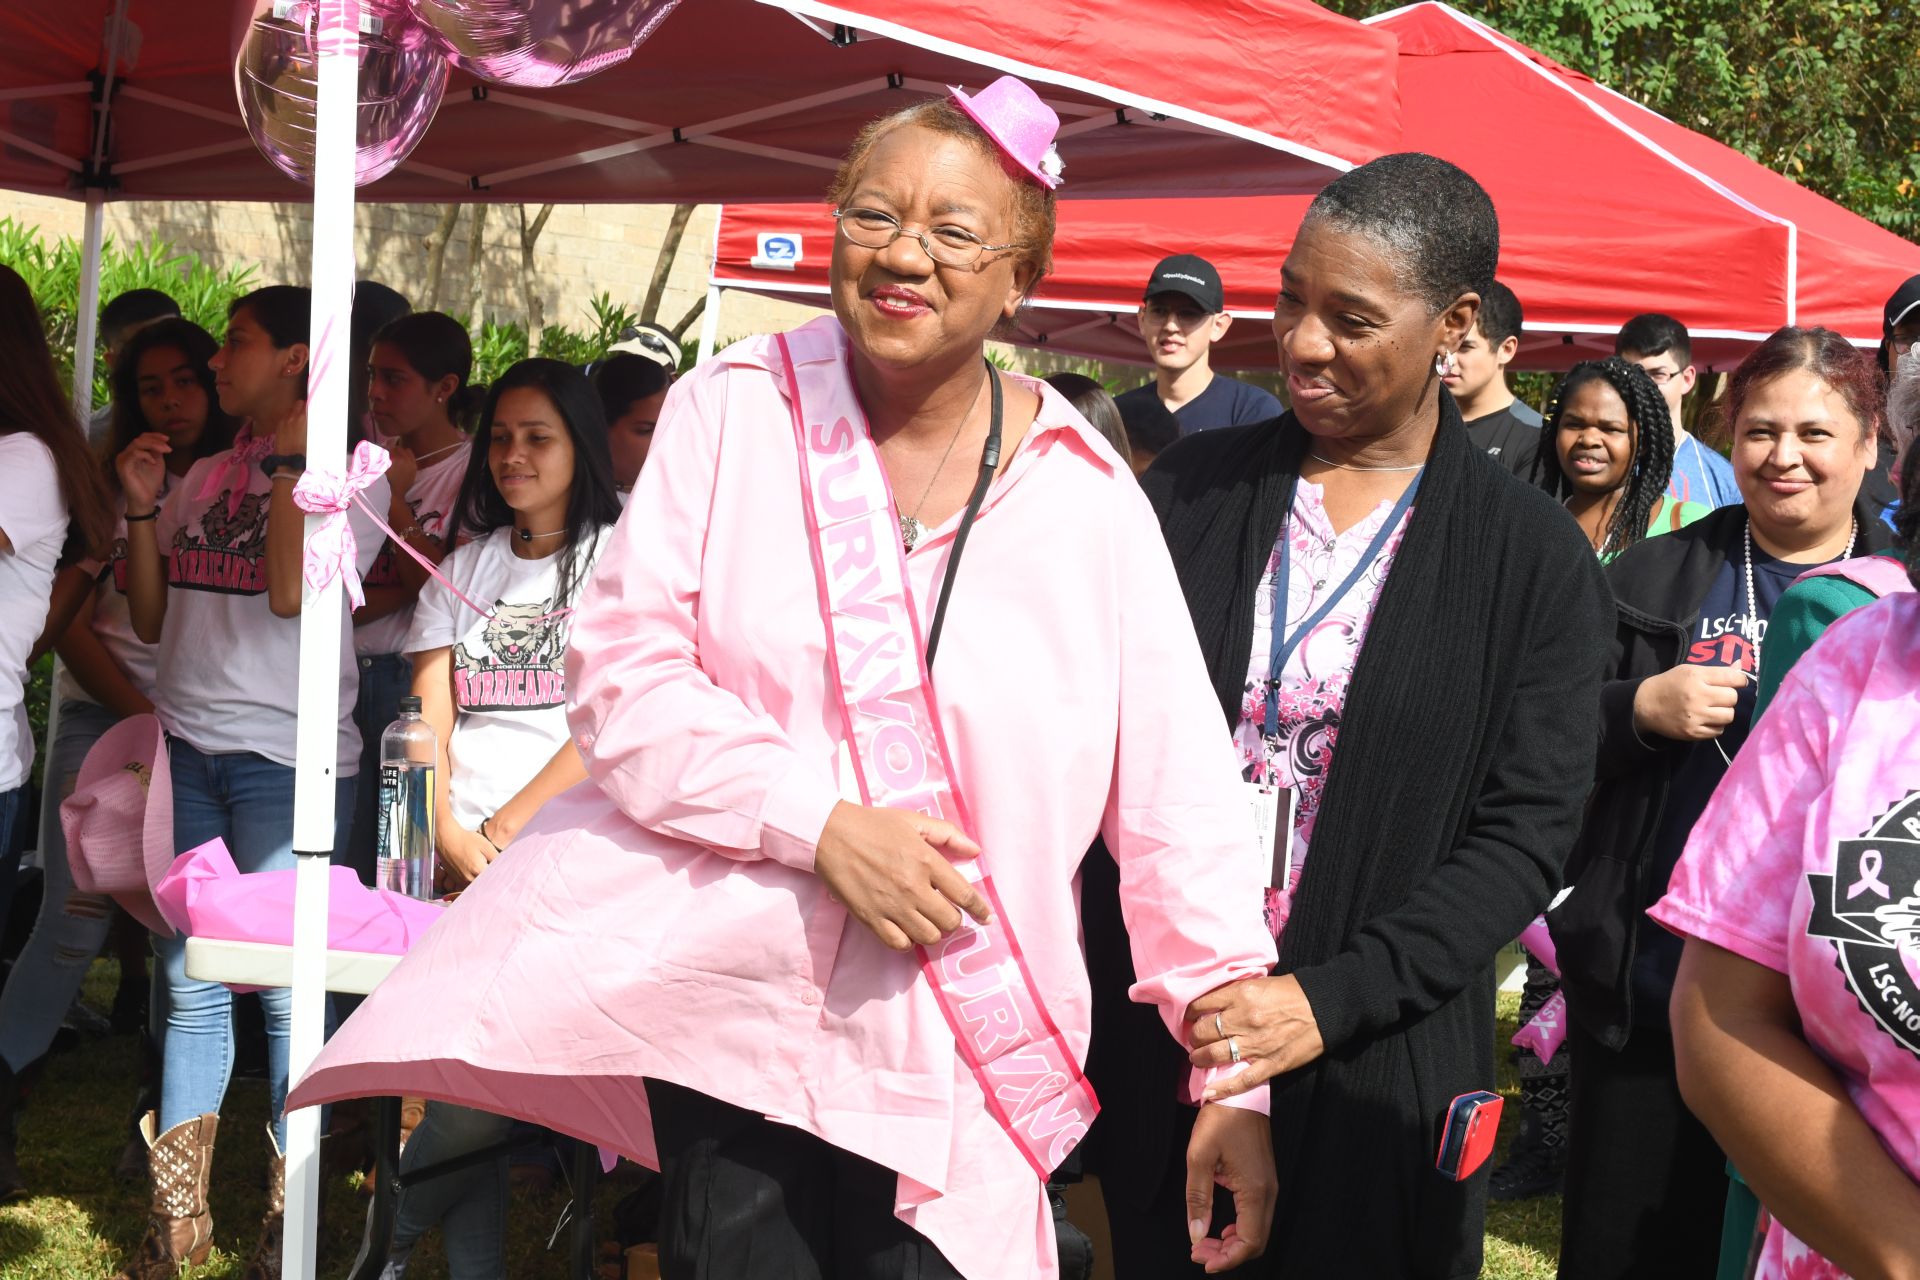 Photo of participants at breast cancer awareness walk